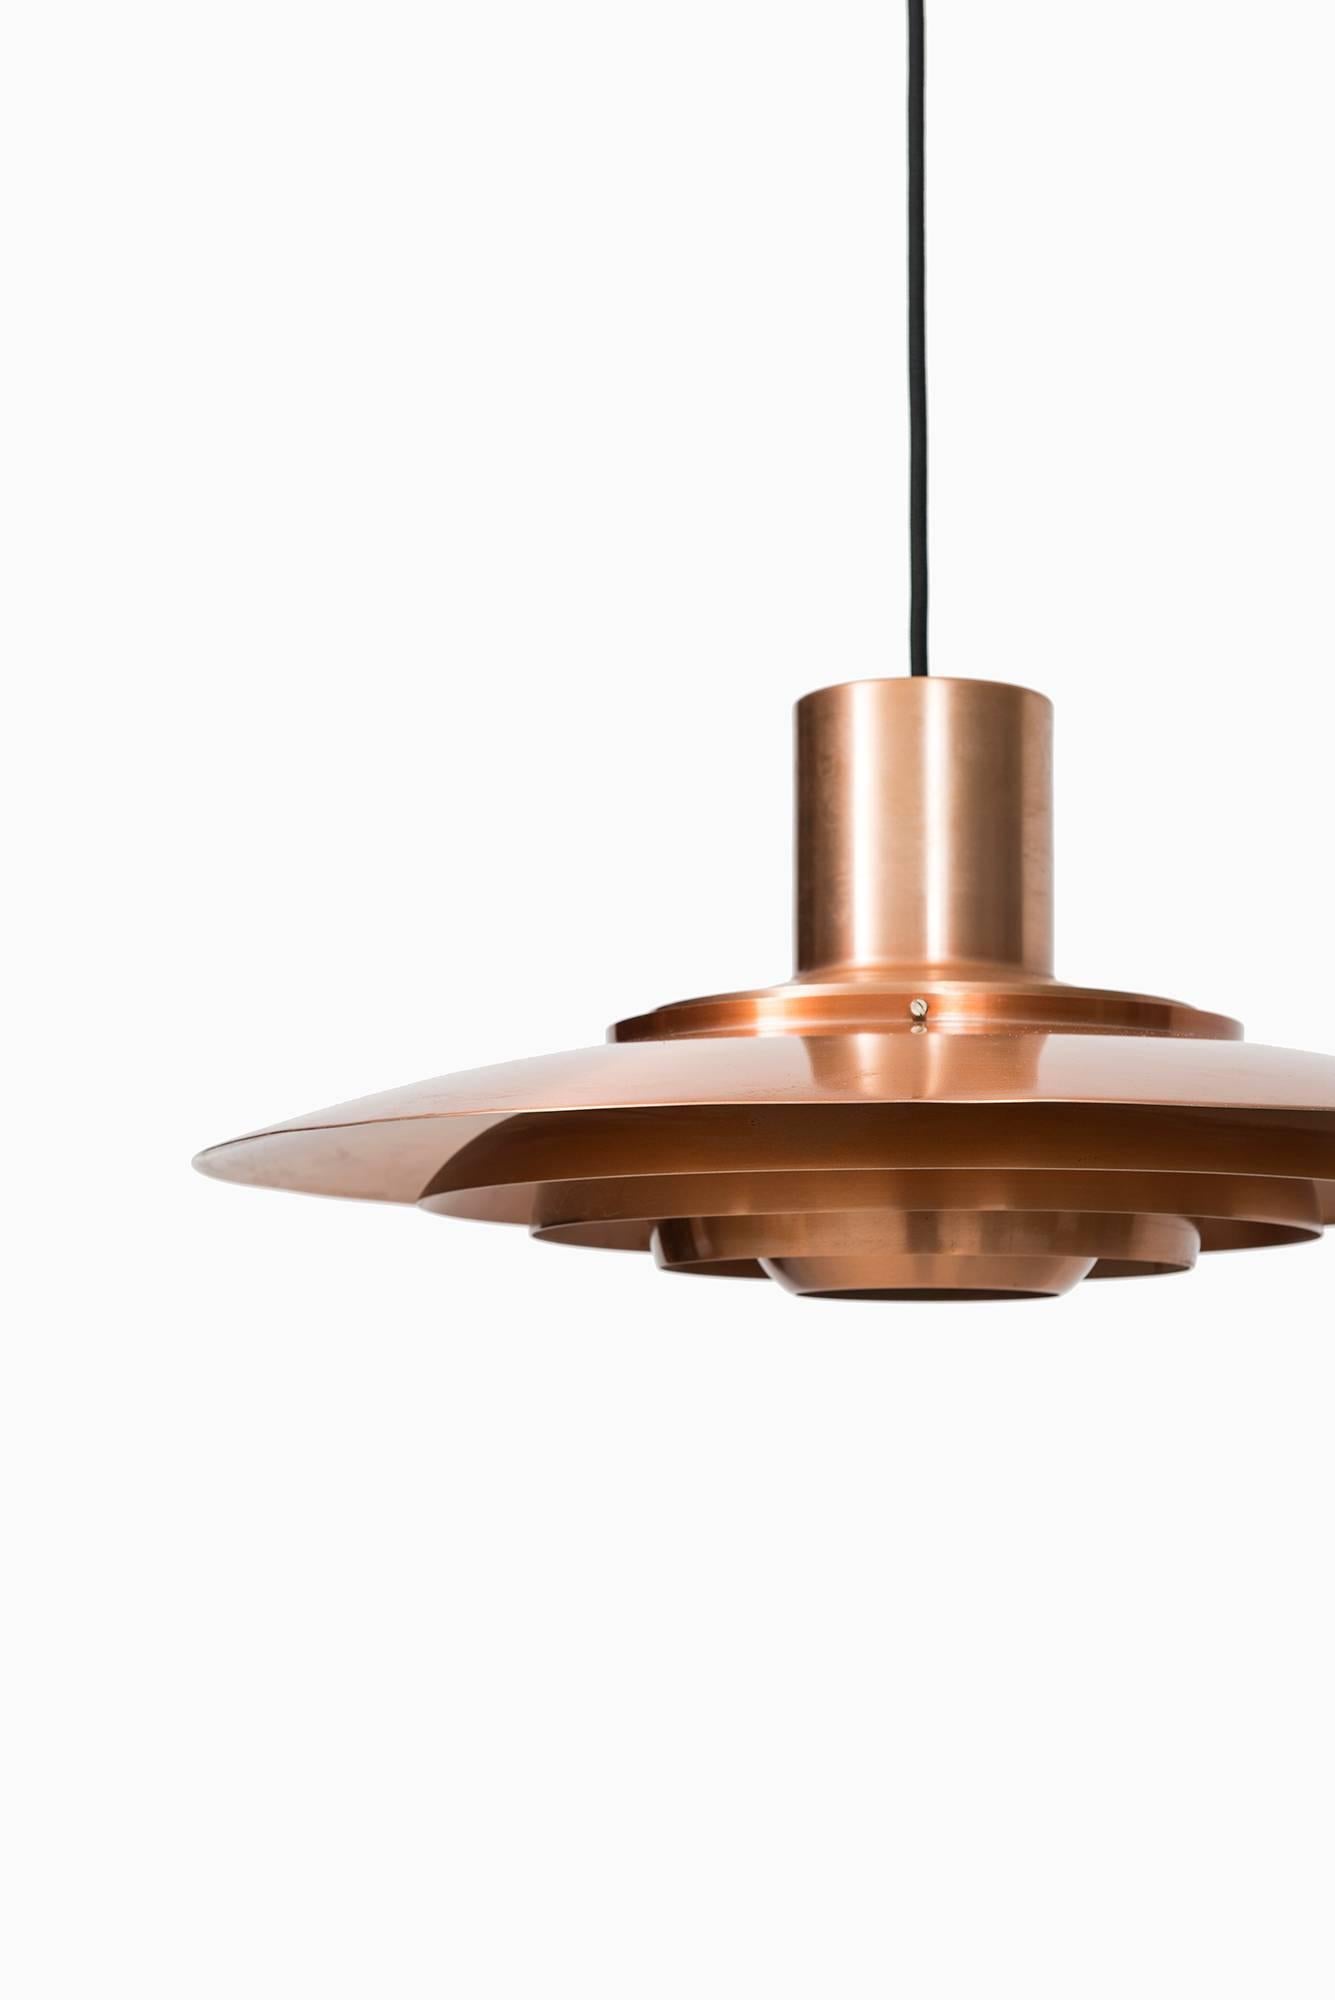 Rare ceiling lamp in copper designed by Preben Fabricius & Jørgen Kastholm. Produced by Nordisk Solar in Denmark.